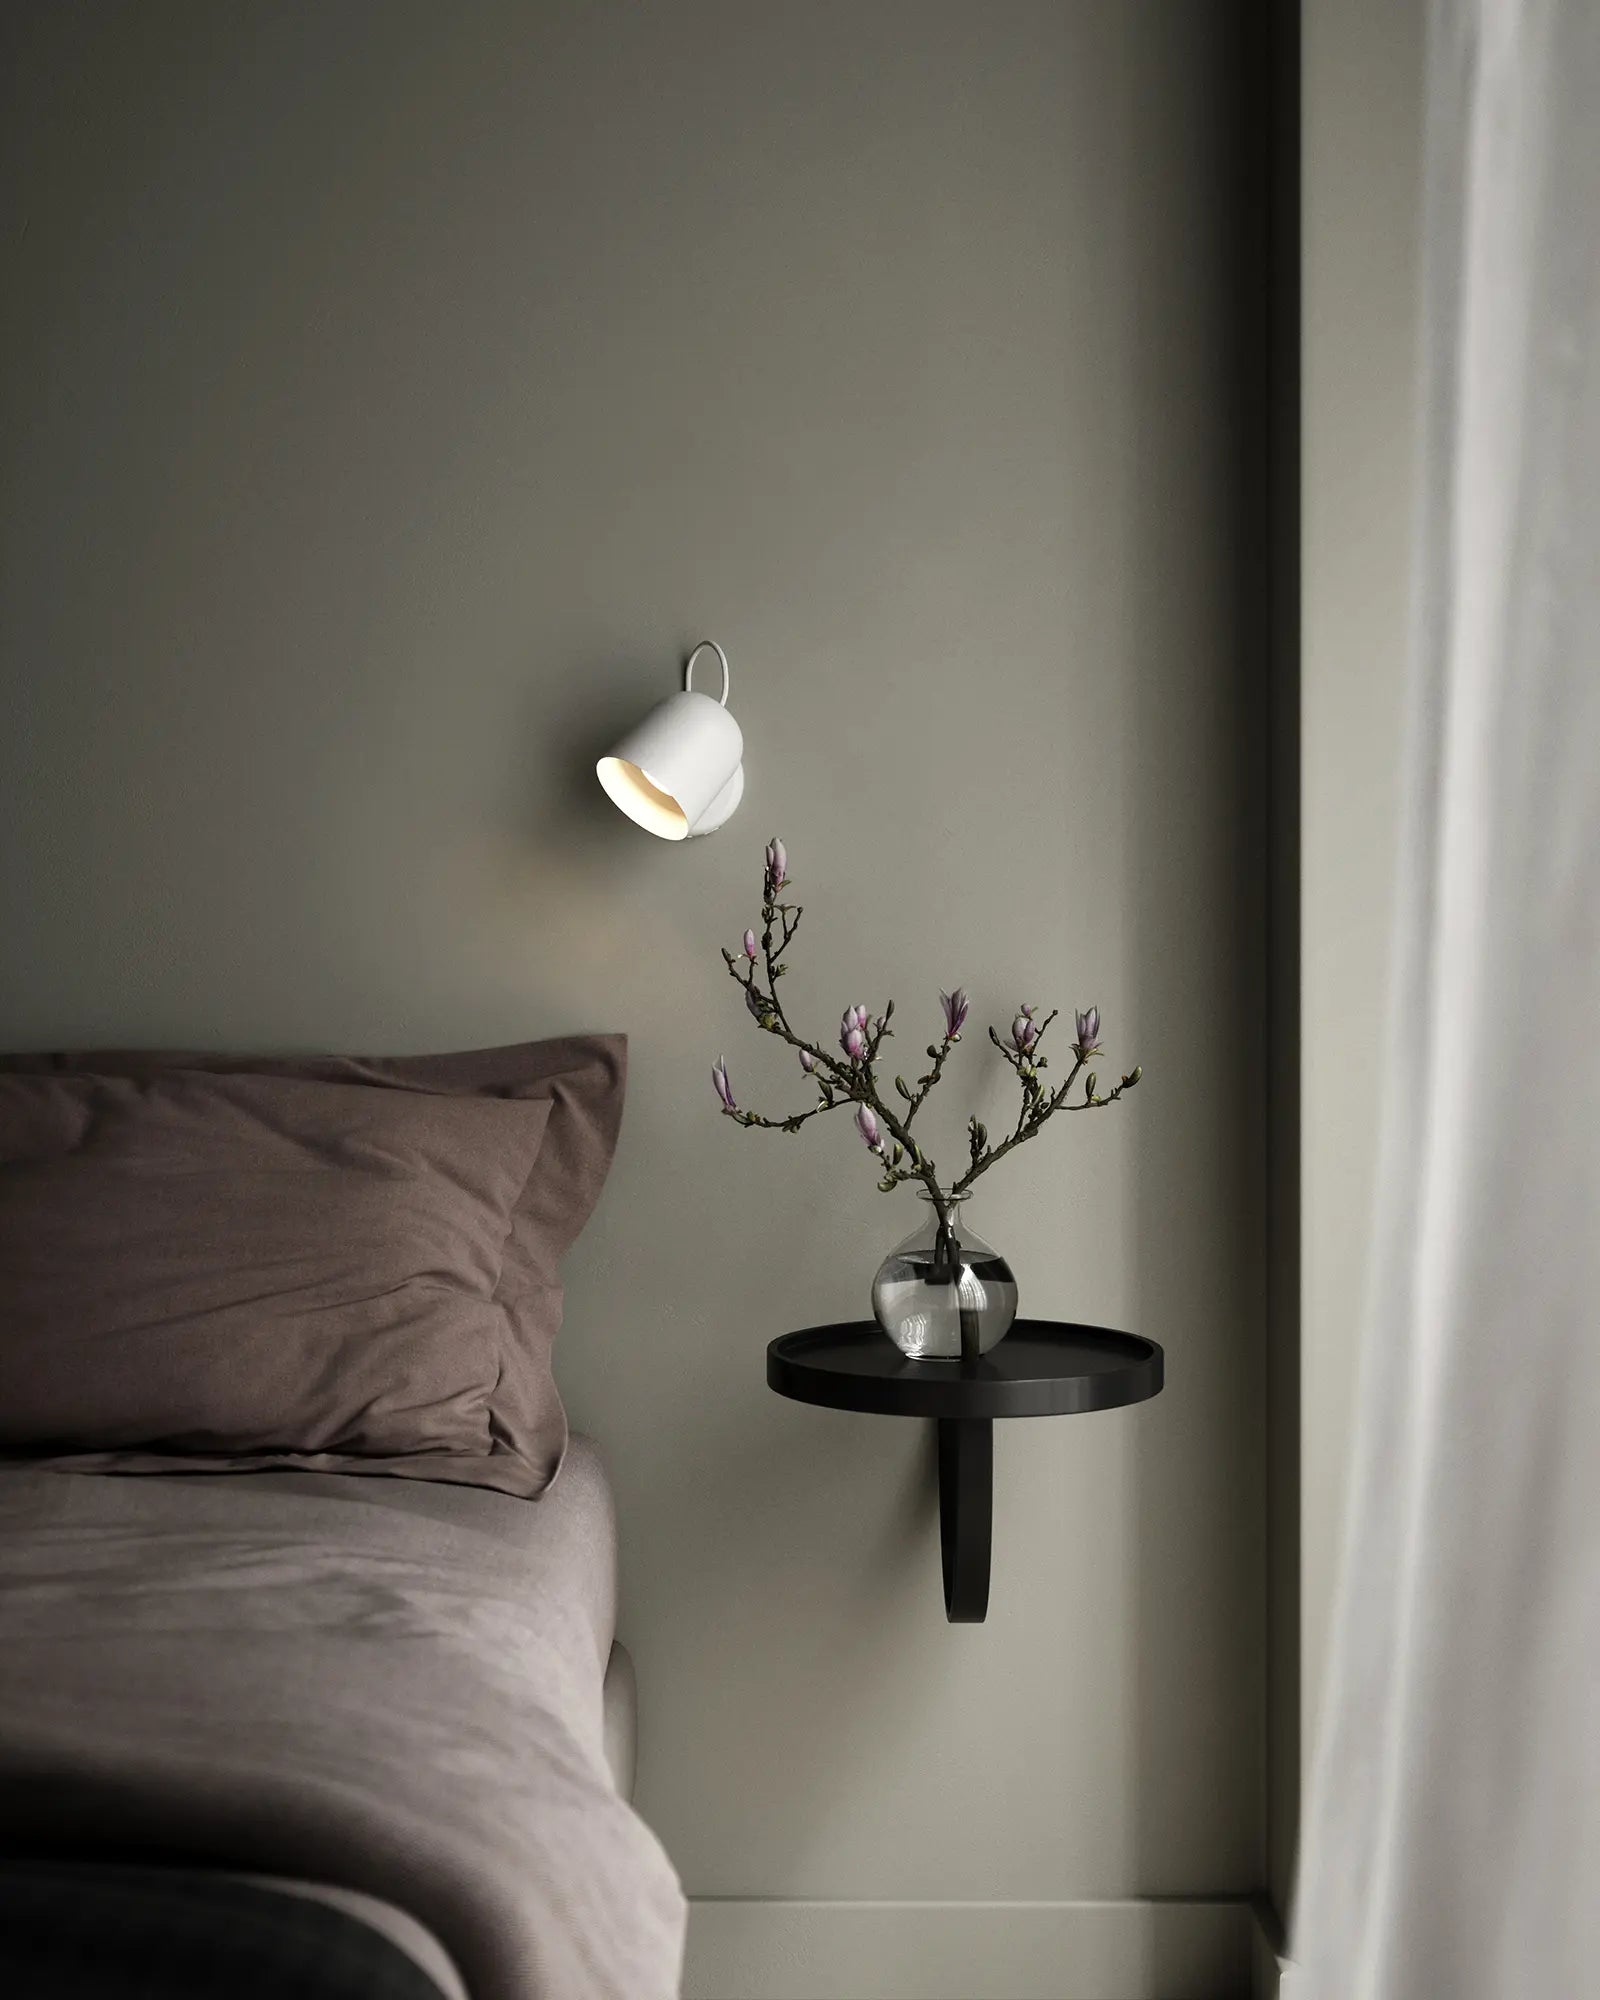 Angle adjustable Scandinavian wall light on a bed side